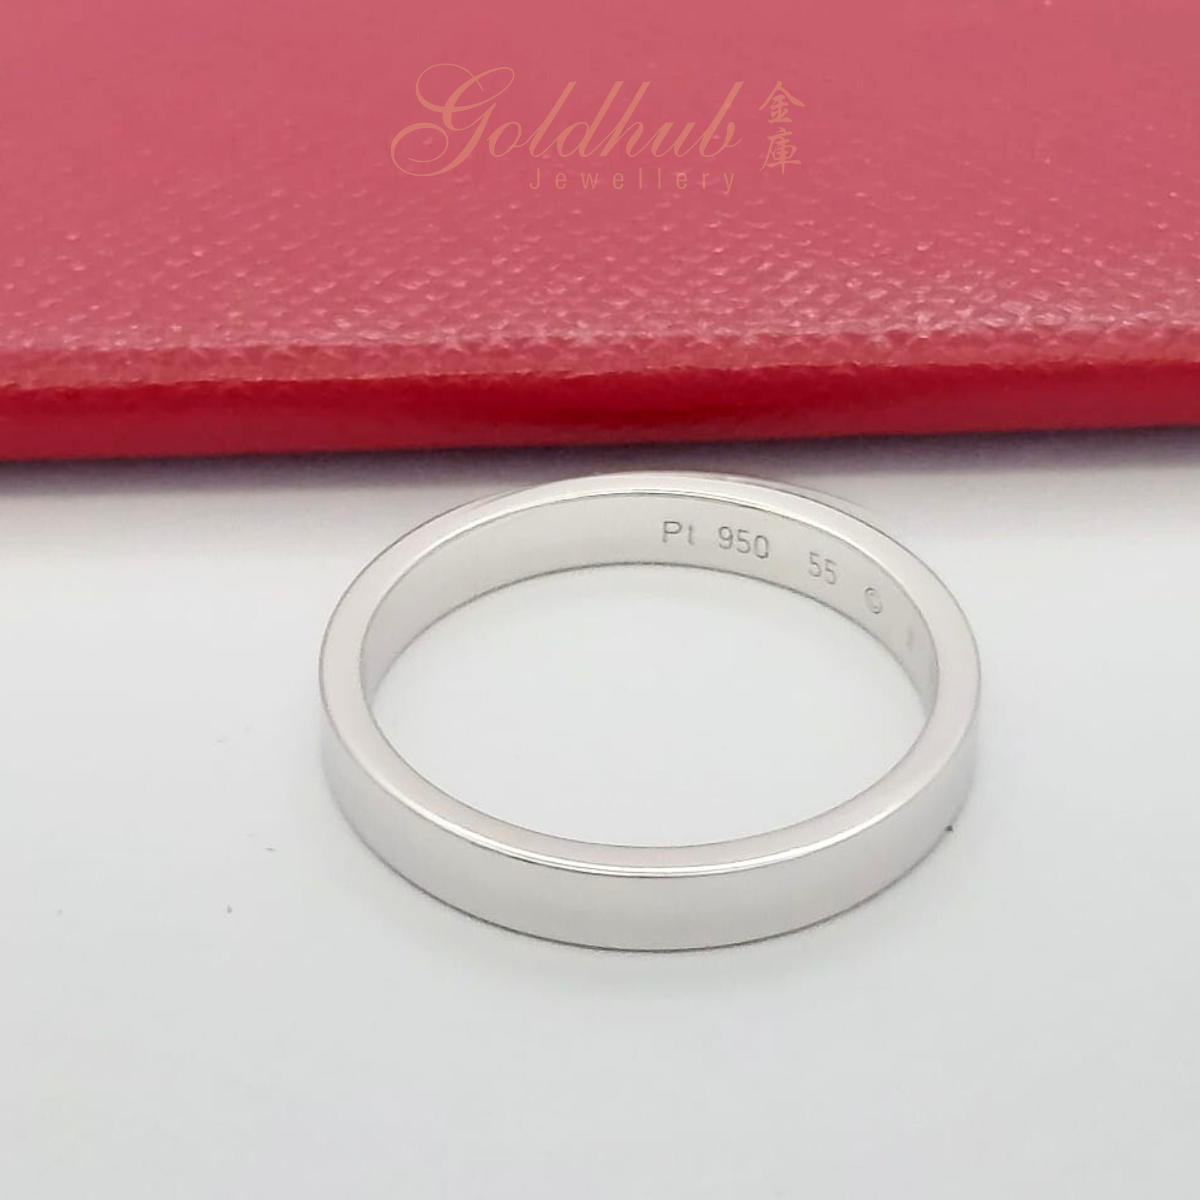 PT950 Pre-loved Cartier C De Cartier Wedding Band Ring in Platinum